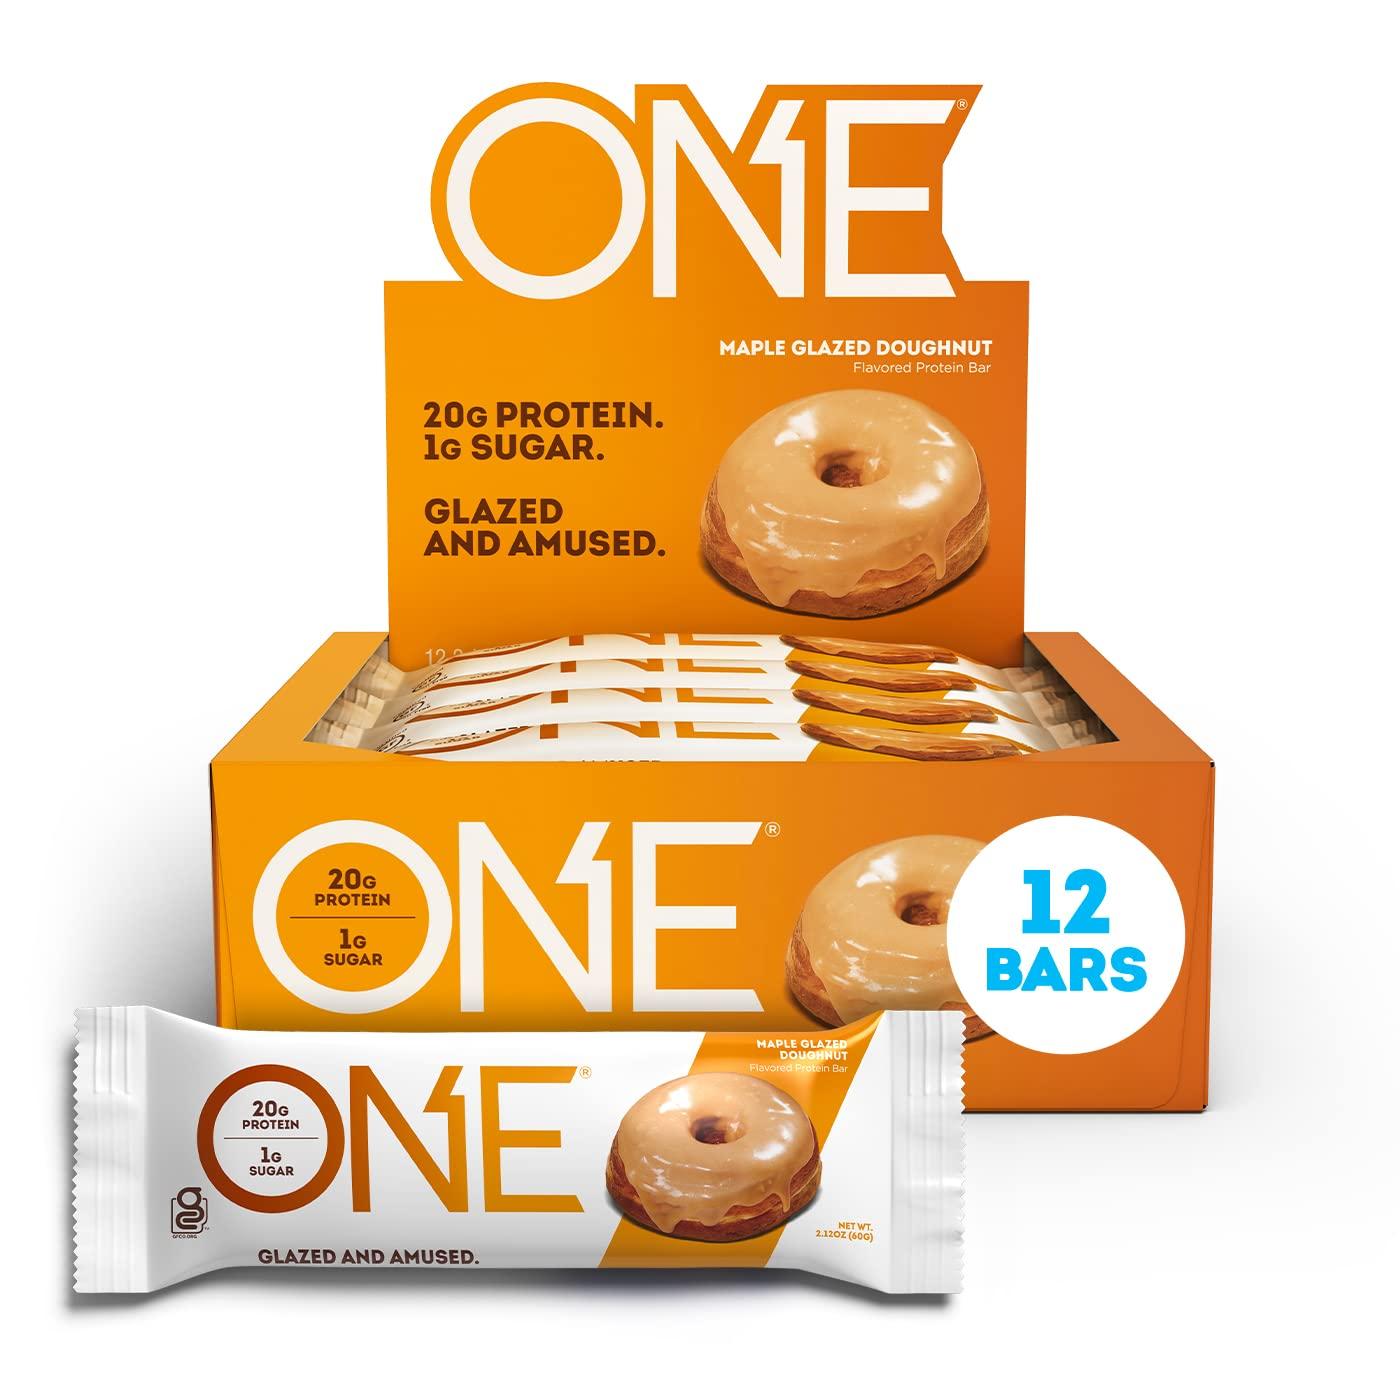 ONE Maple Glazed Doughnut Protein Bars 12 Pack for $11.98 Shipped